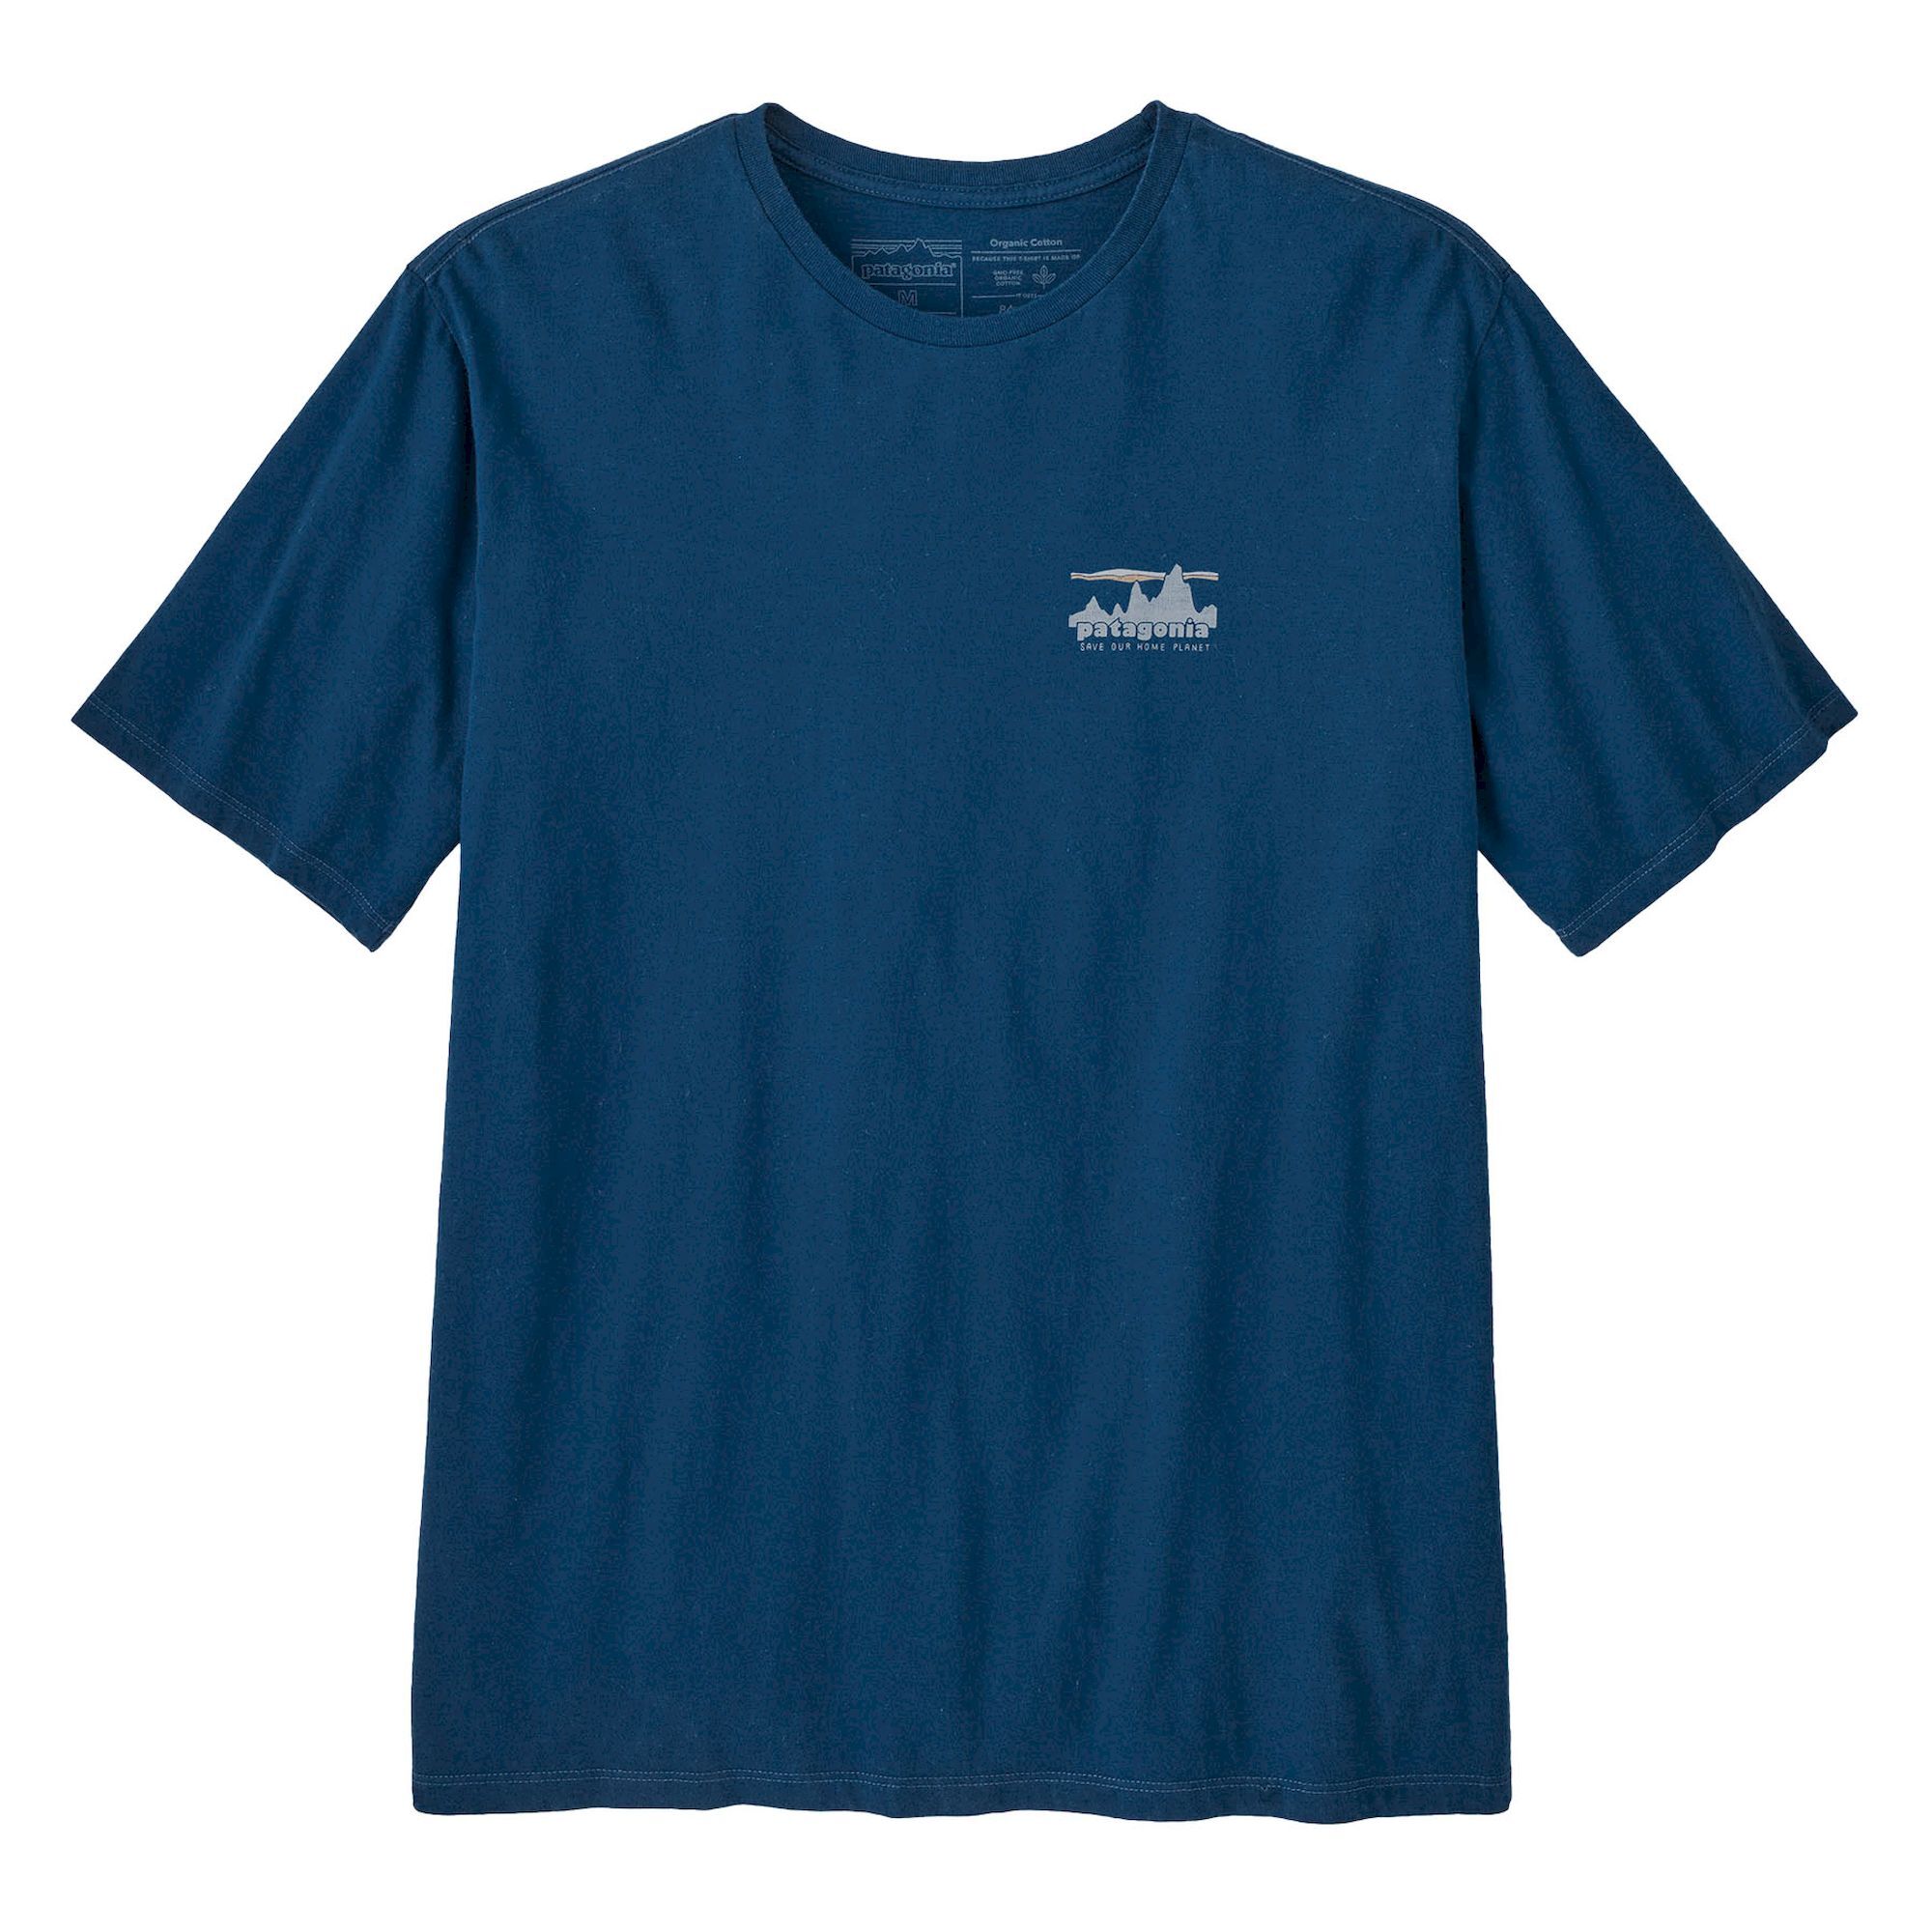 Patagonia 73 Skyline Regenerative Organic Pilot Cotton - T-shirt - Men's